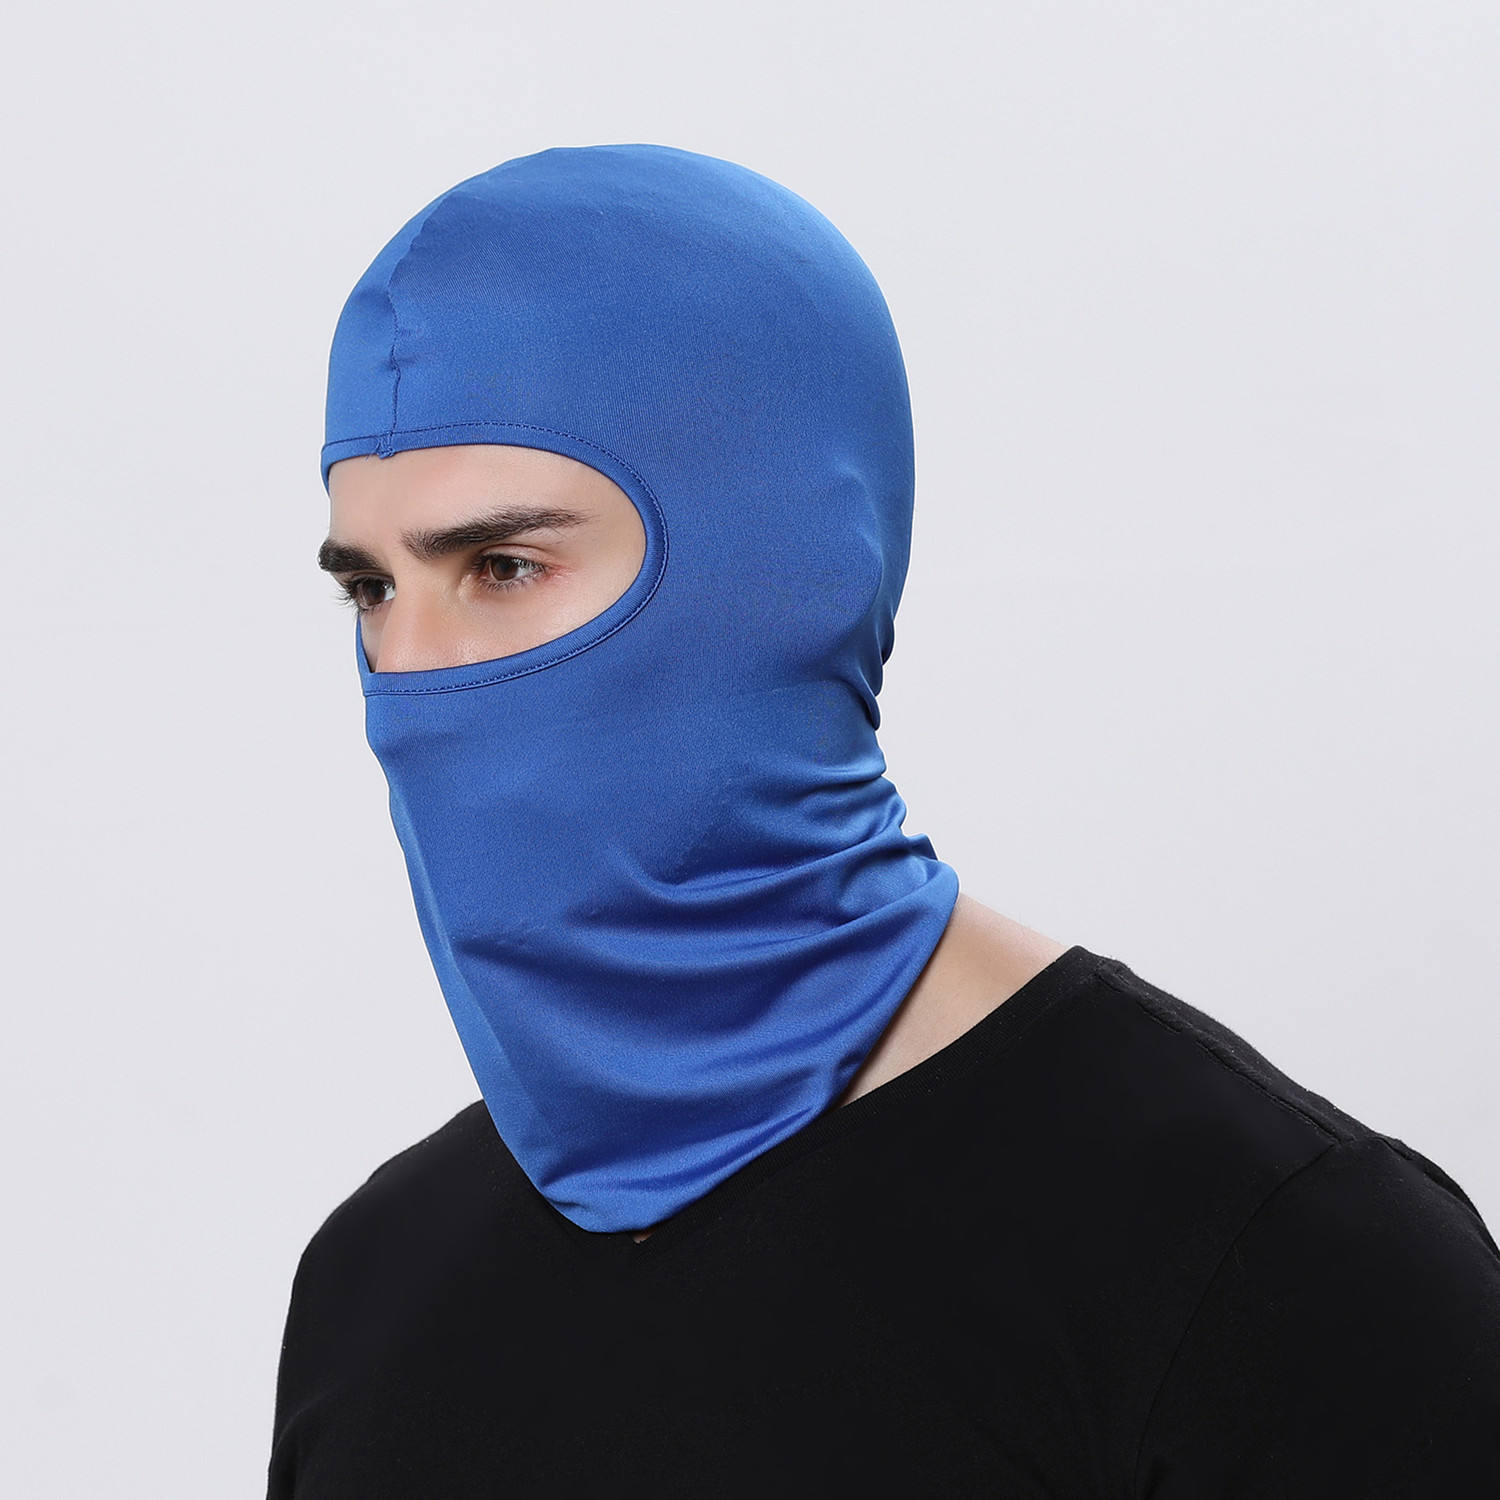 Shiesty Mask Balaclava Ski Mask Breathable Face Covering Pooh Shiesty Mask